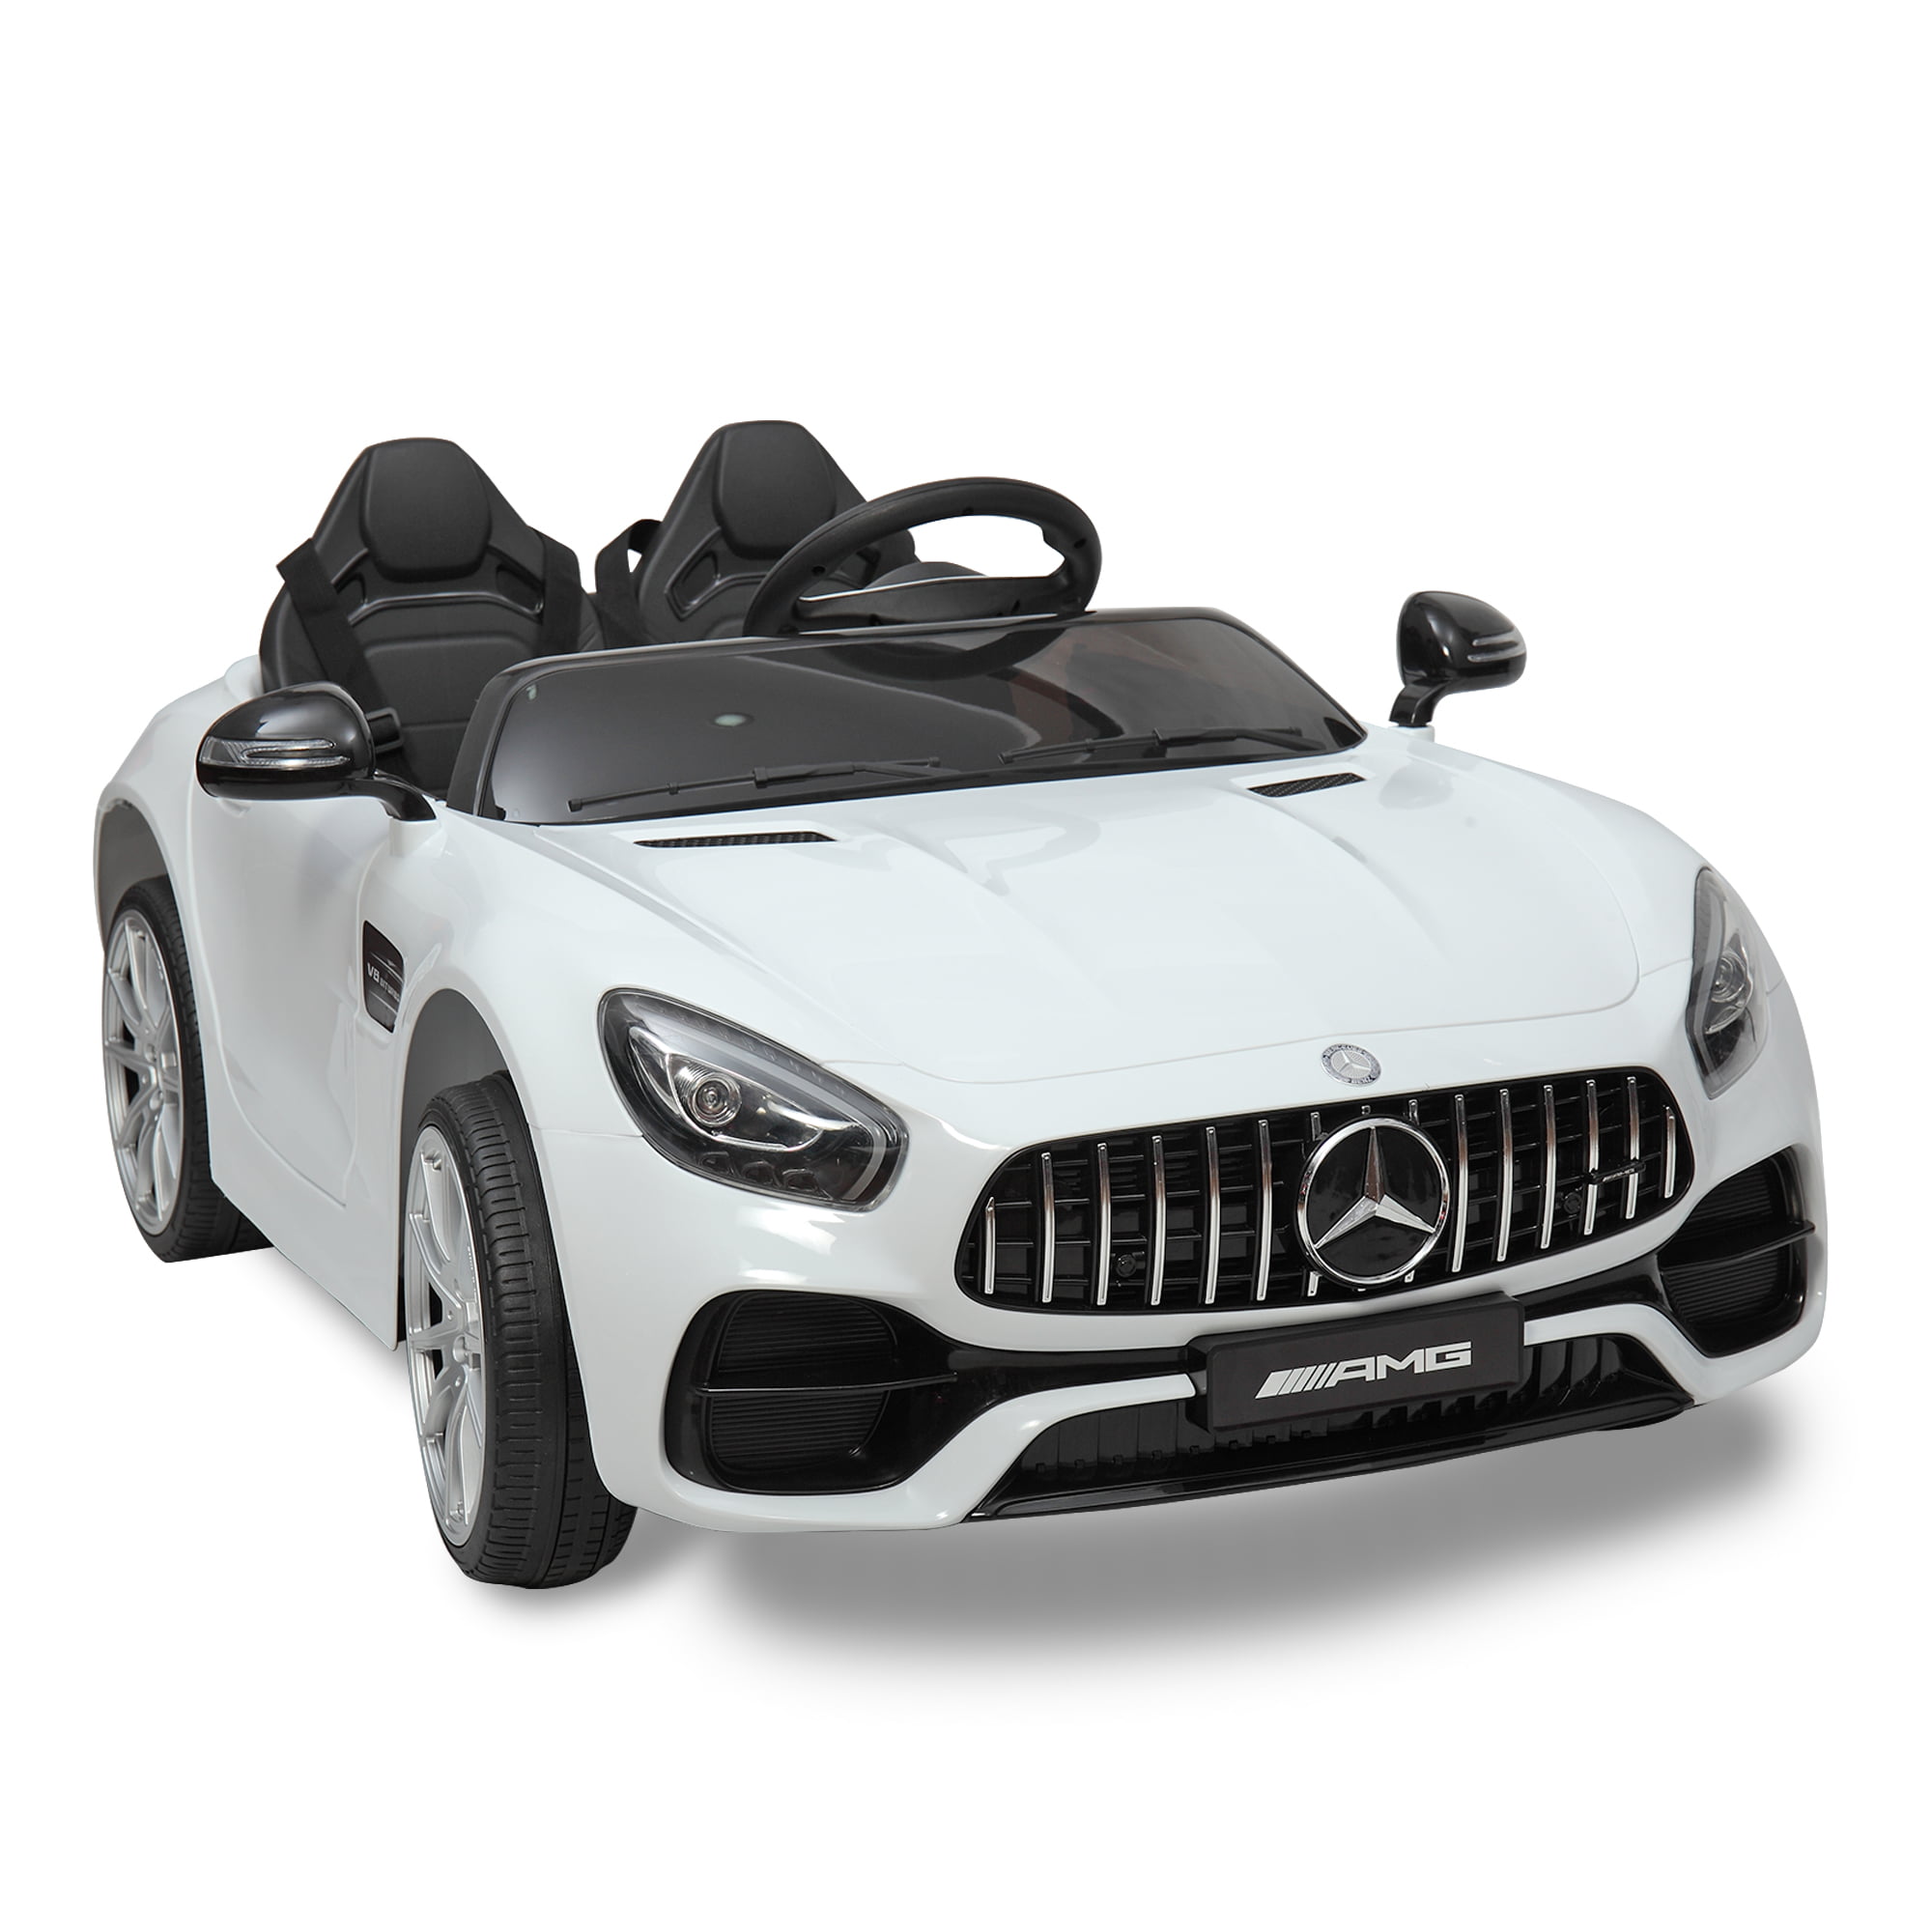 Tobbi Mercedes Benz Licensed 12V Electric Kids Ride on Car with Remote